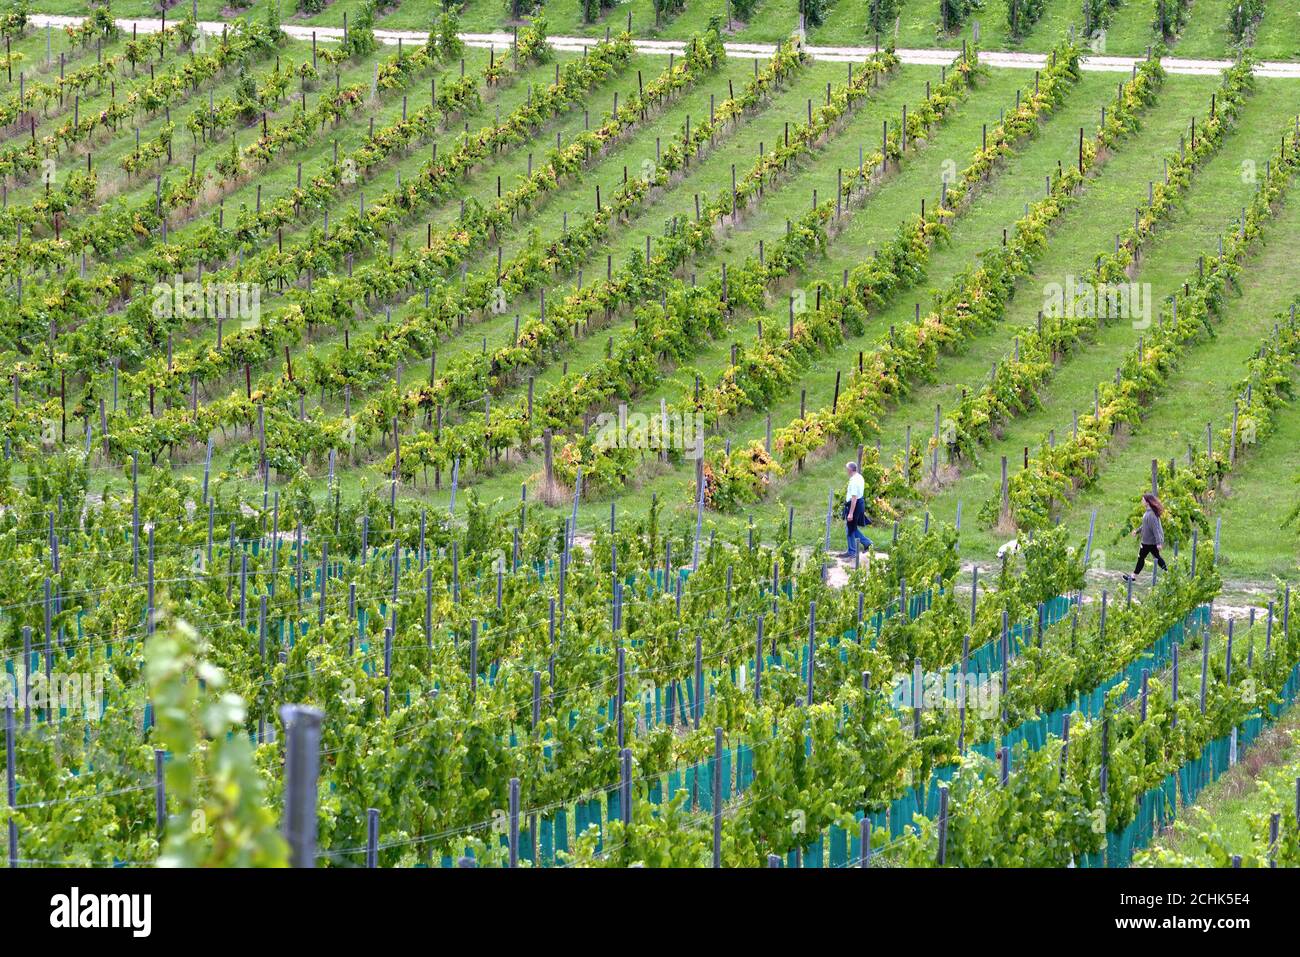 Vineyards at Denbies winery at Dorking Surrey England UK Stock Photo